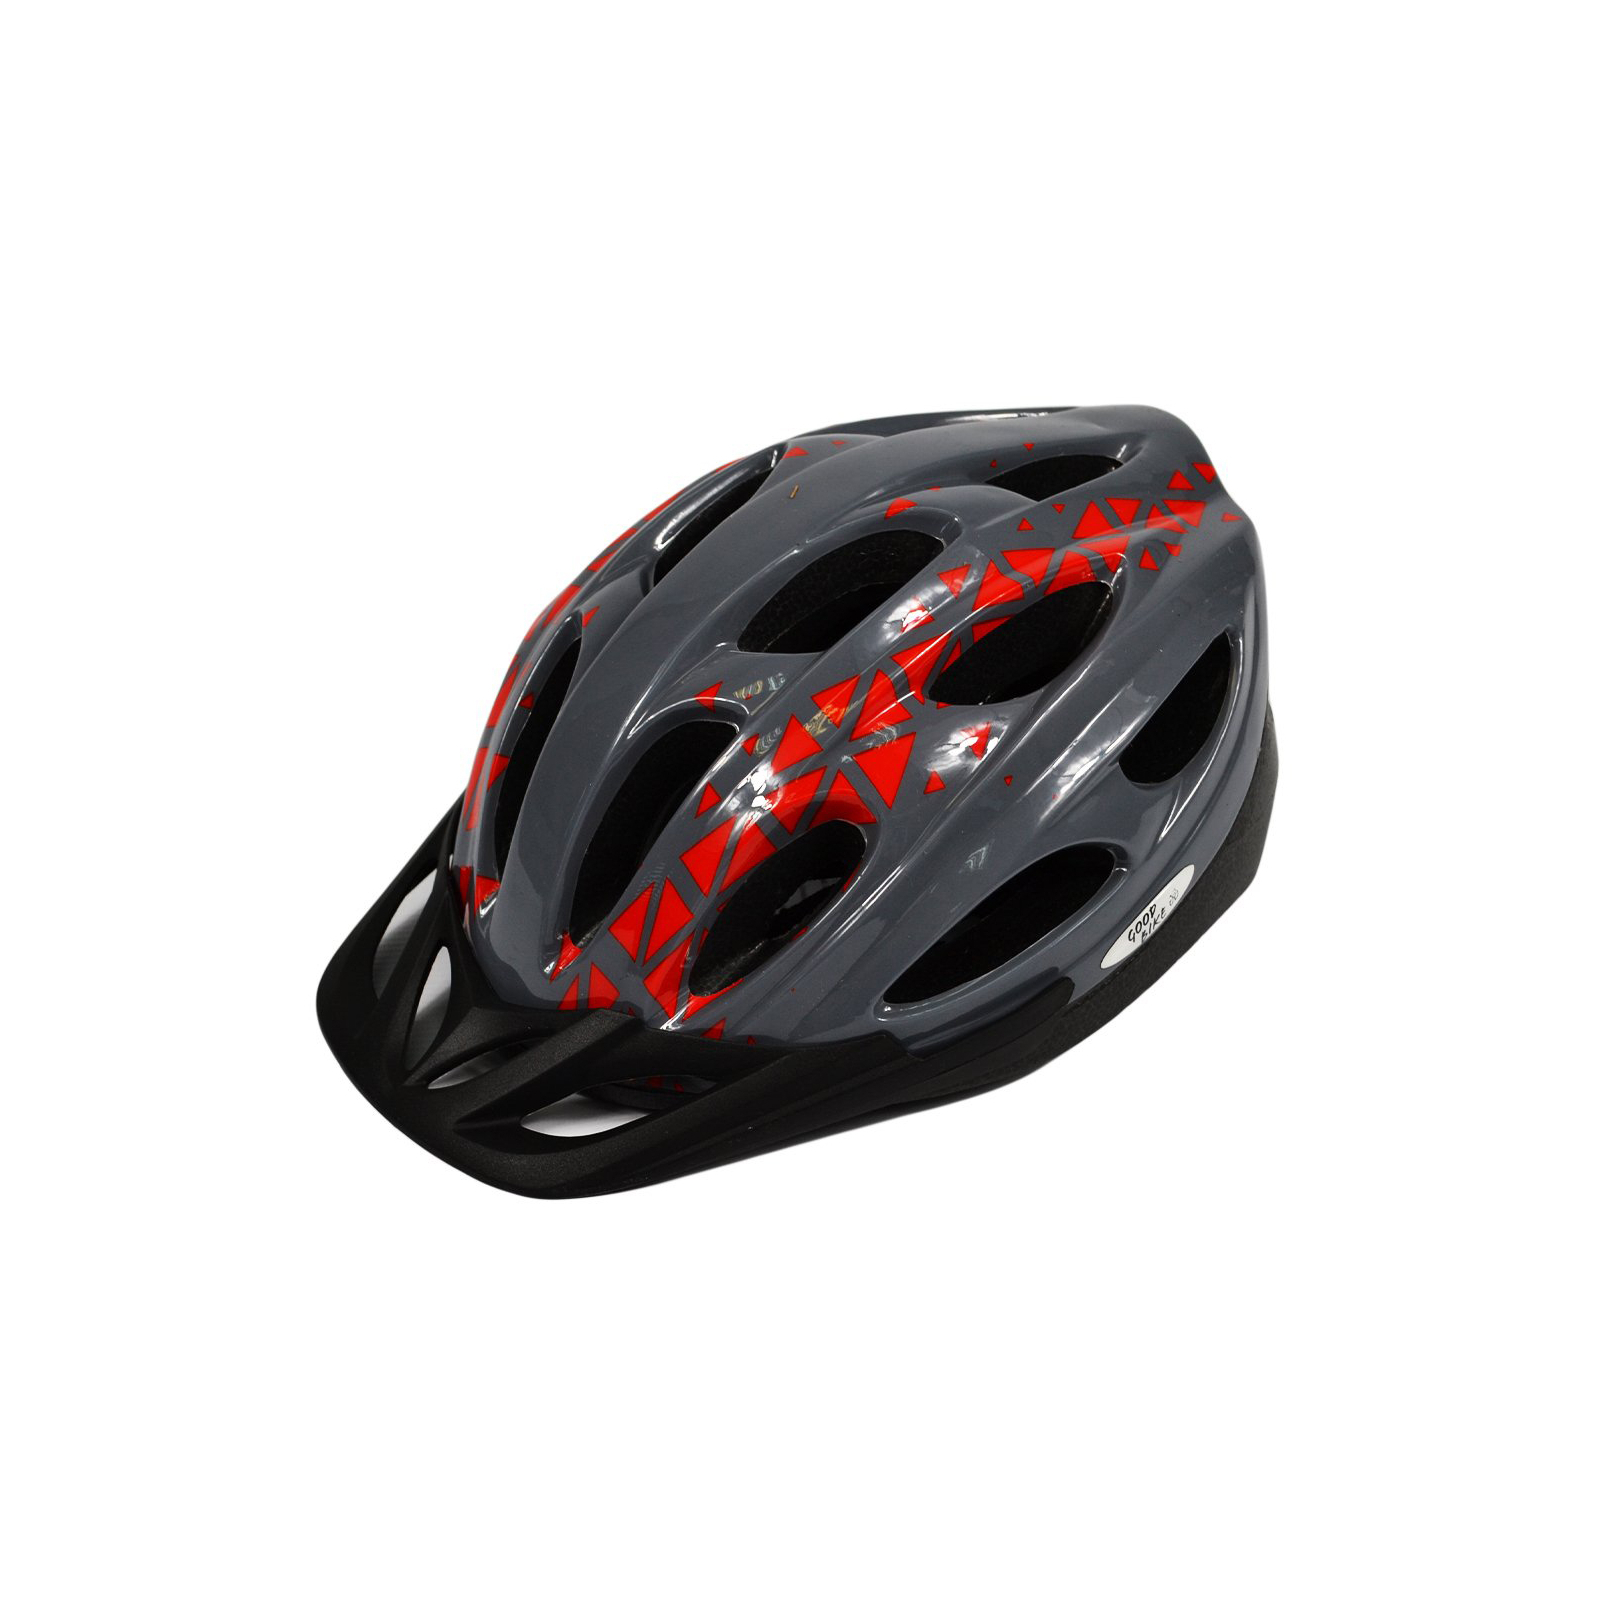 Шлем Good Bike L 58-60 см Snake (88855/3-IS) изображение 3